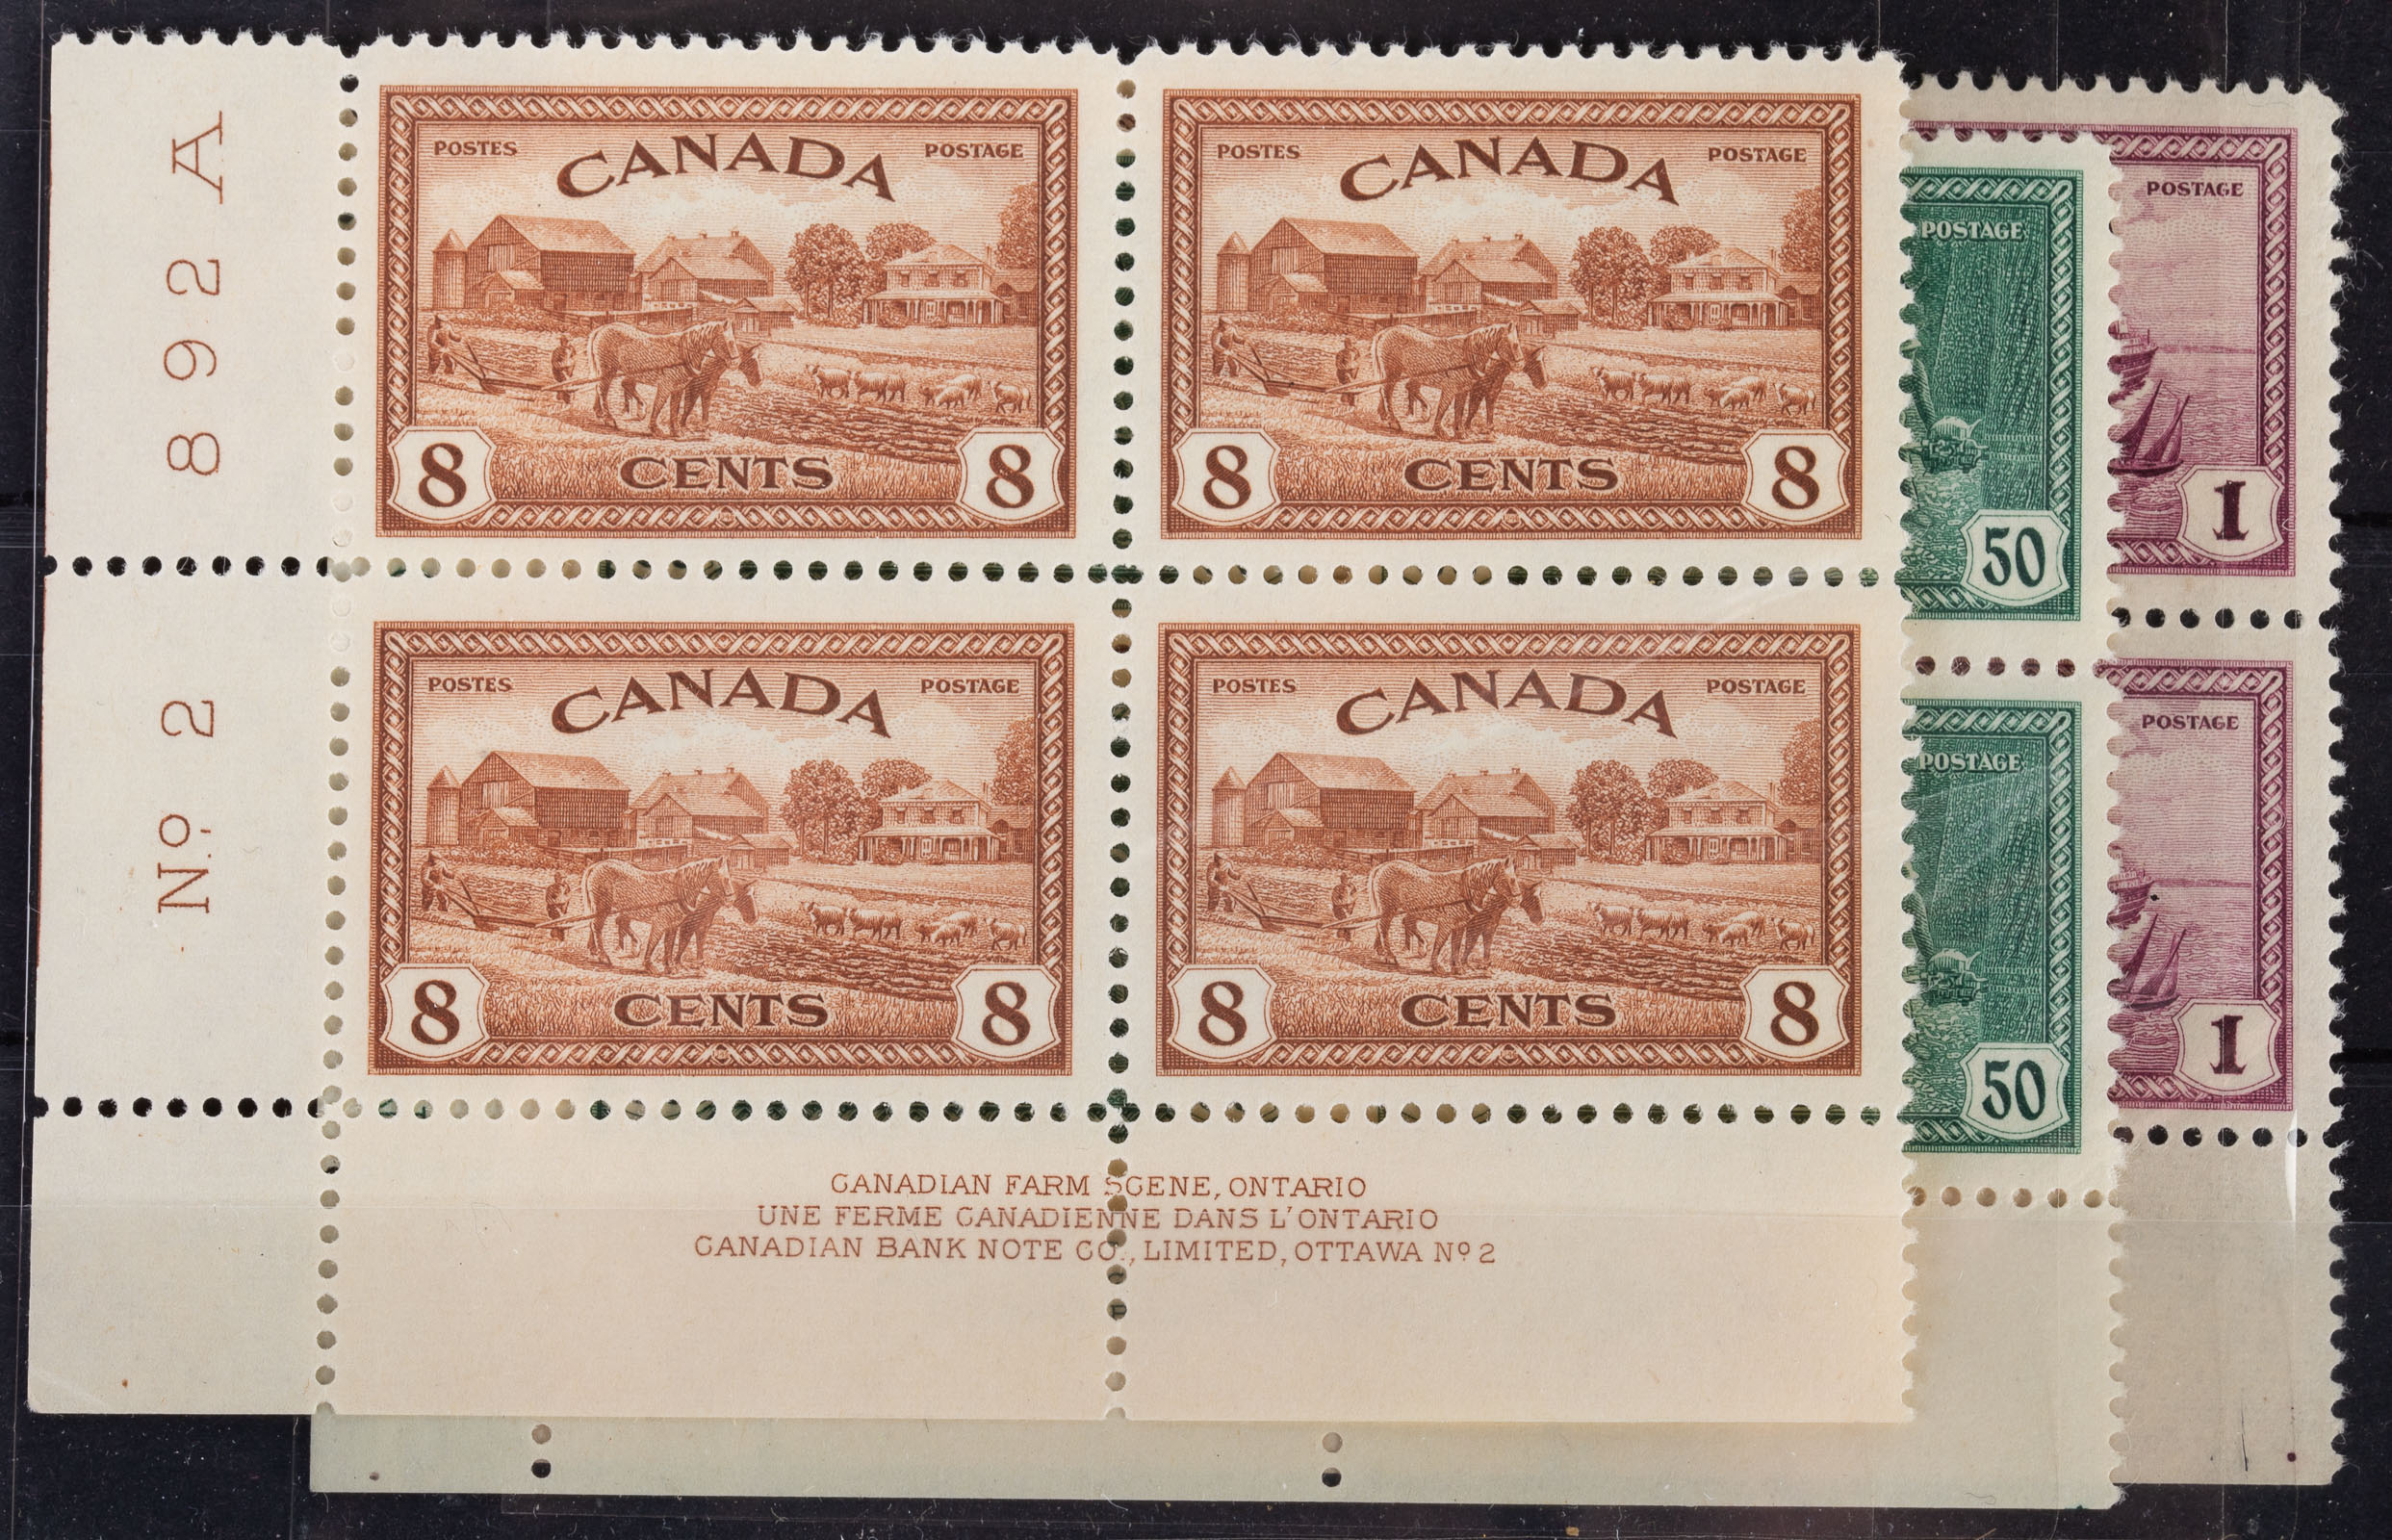 CANADA POSTAGE STAMP BLOCKS 1946 338a0f